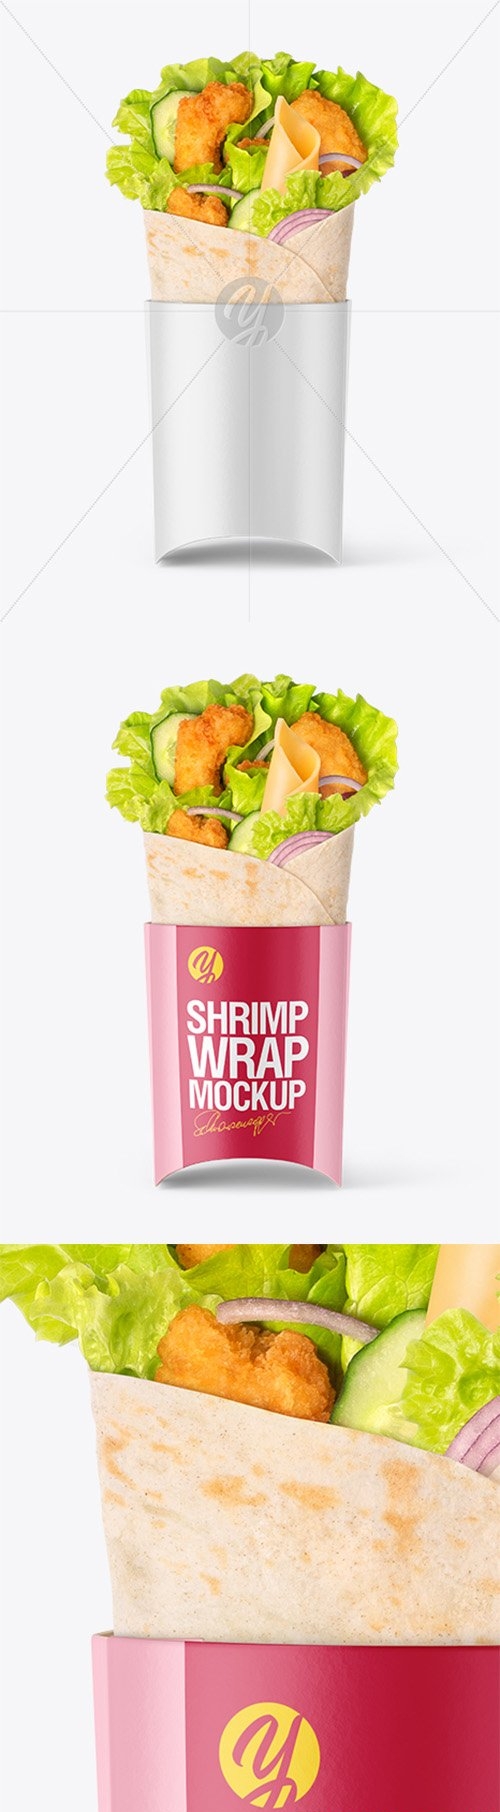 Shrimp Wrap Mockup 40337